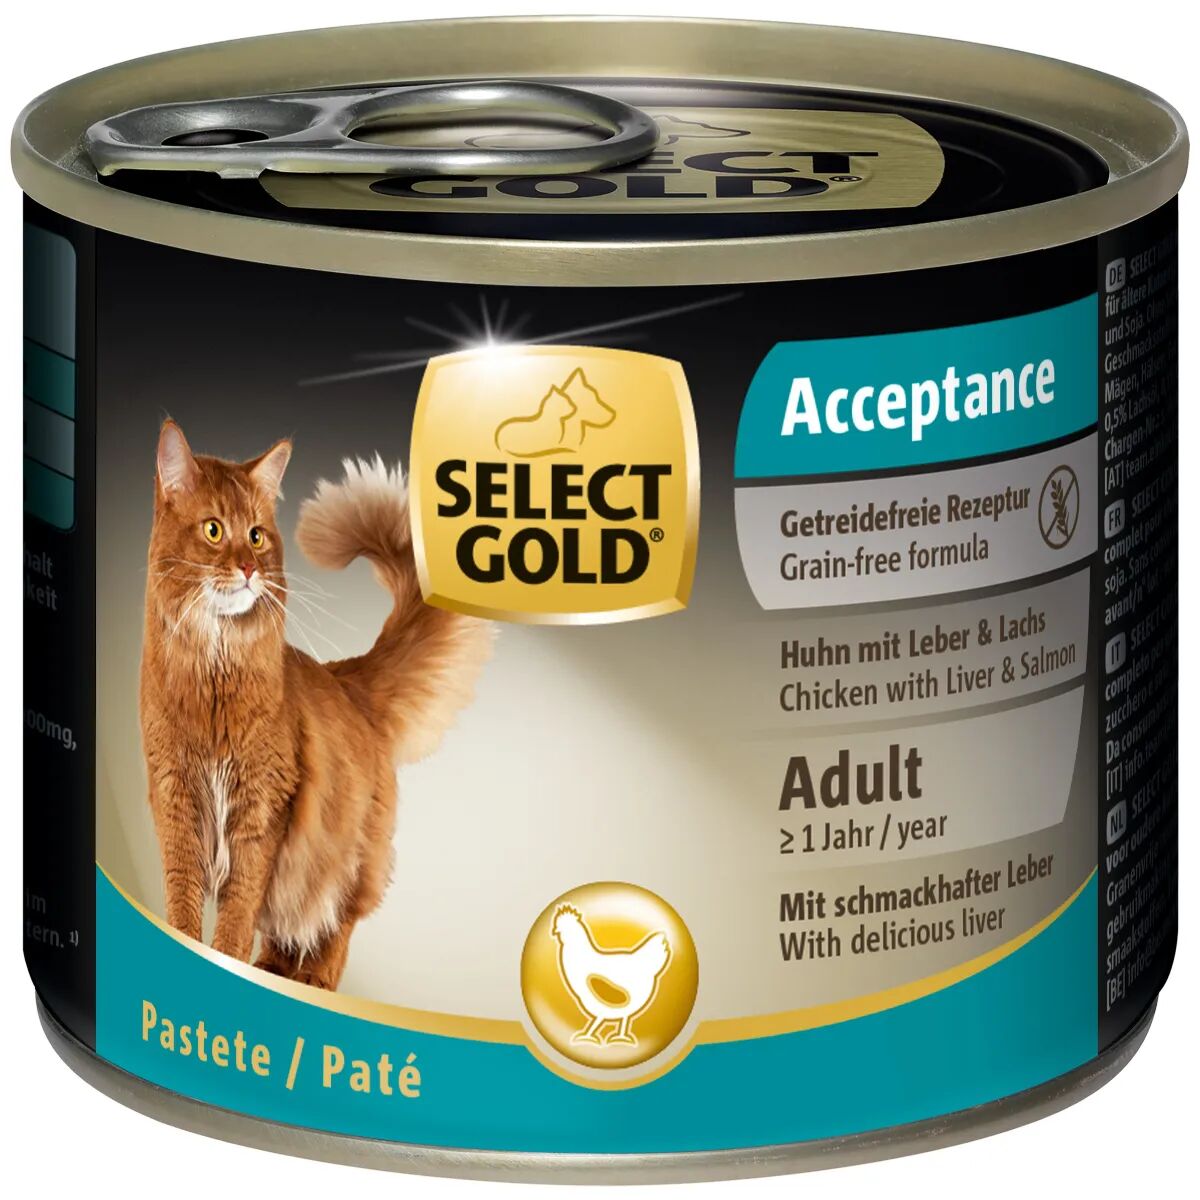 SELECT GOLD Acceptance Cat Adult Lattina Multipack 6x200G POLLO